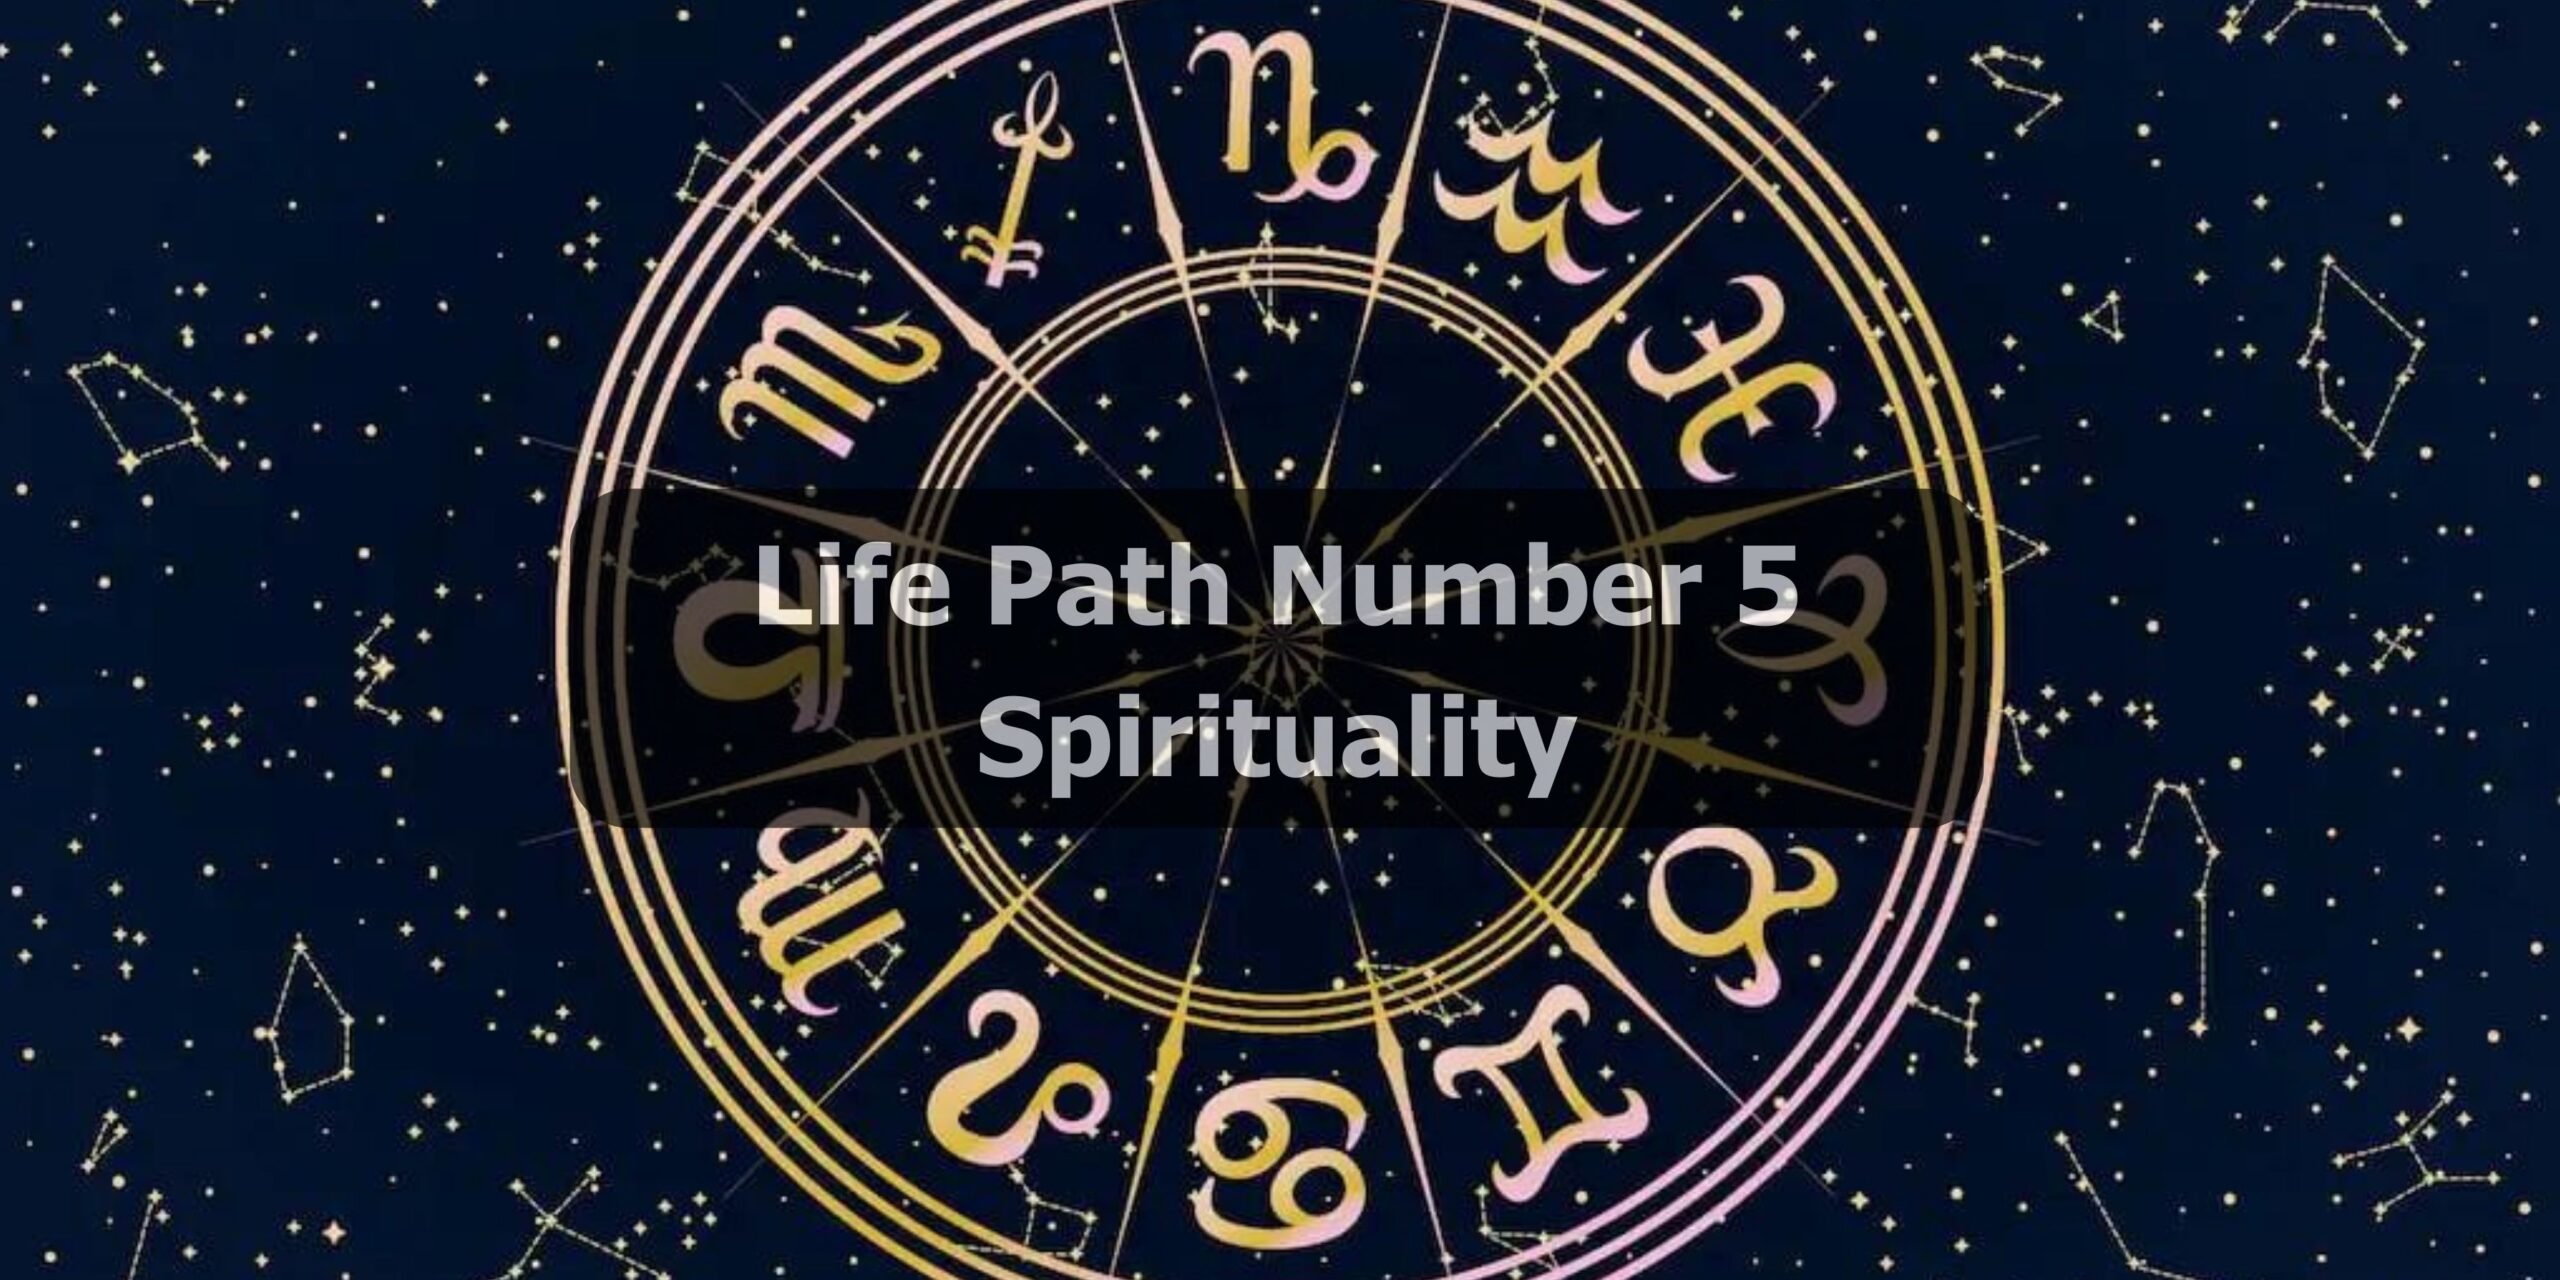 Life Path Number 5 Spirituality